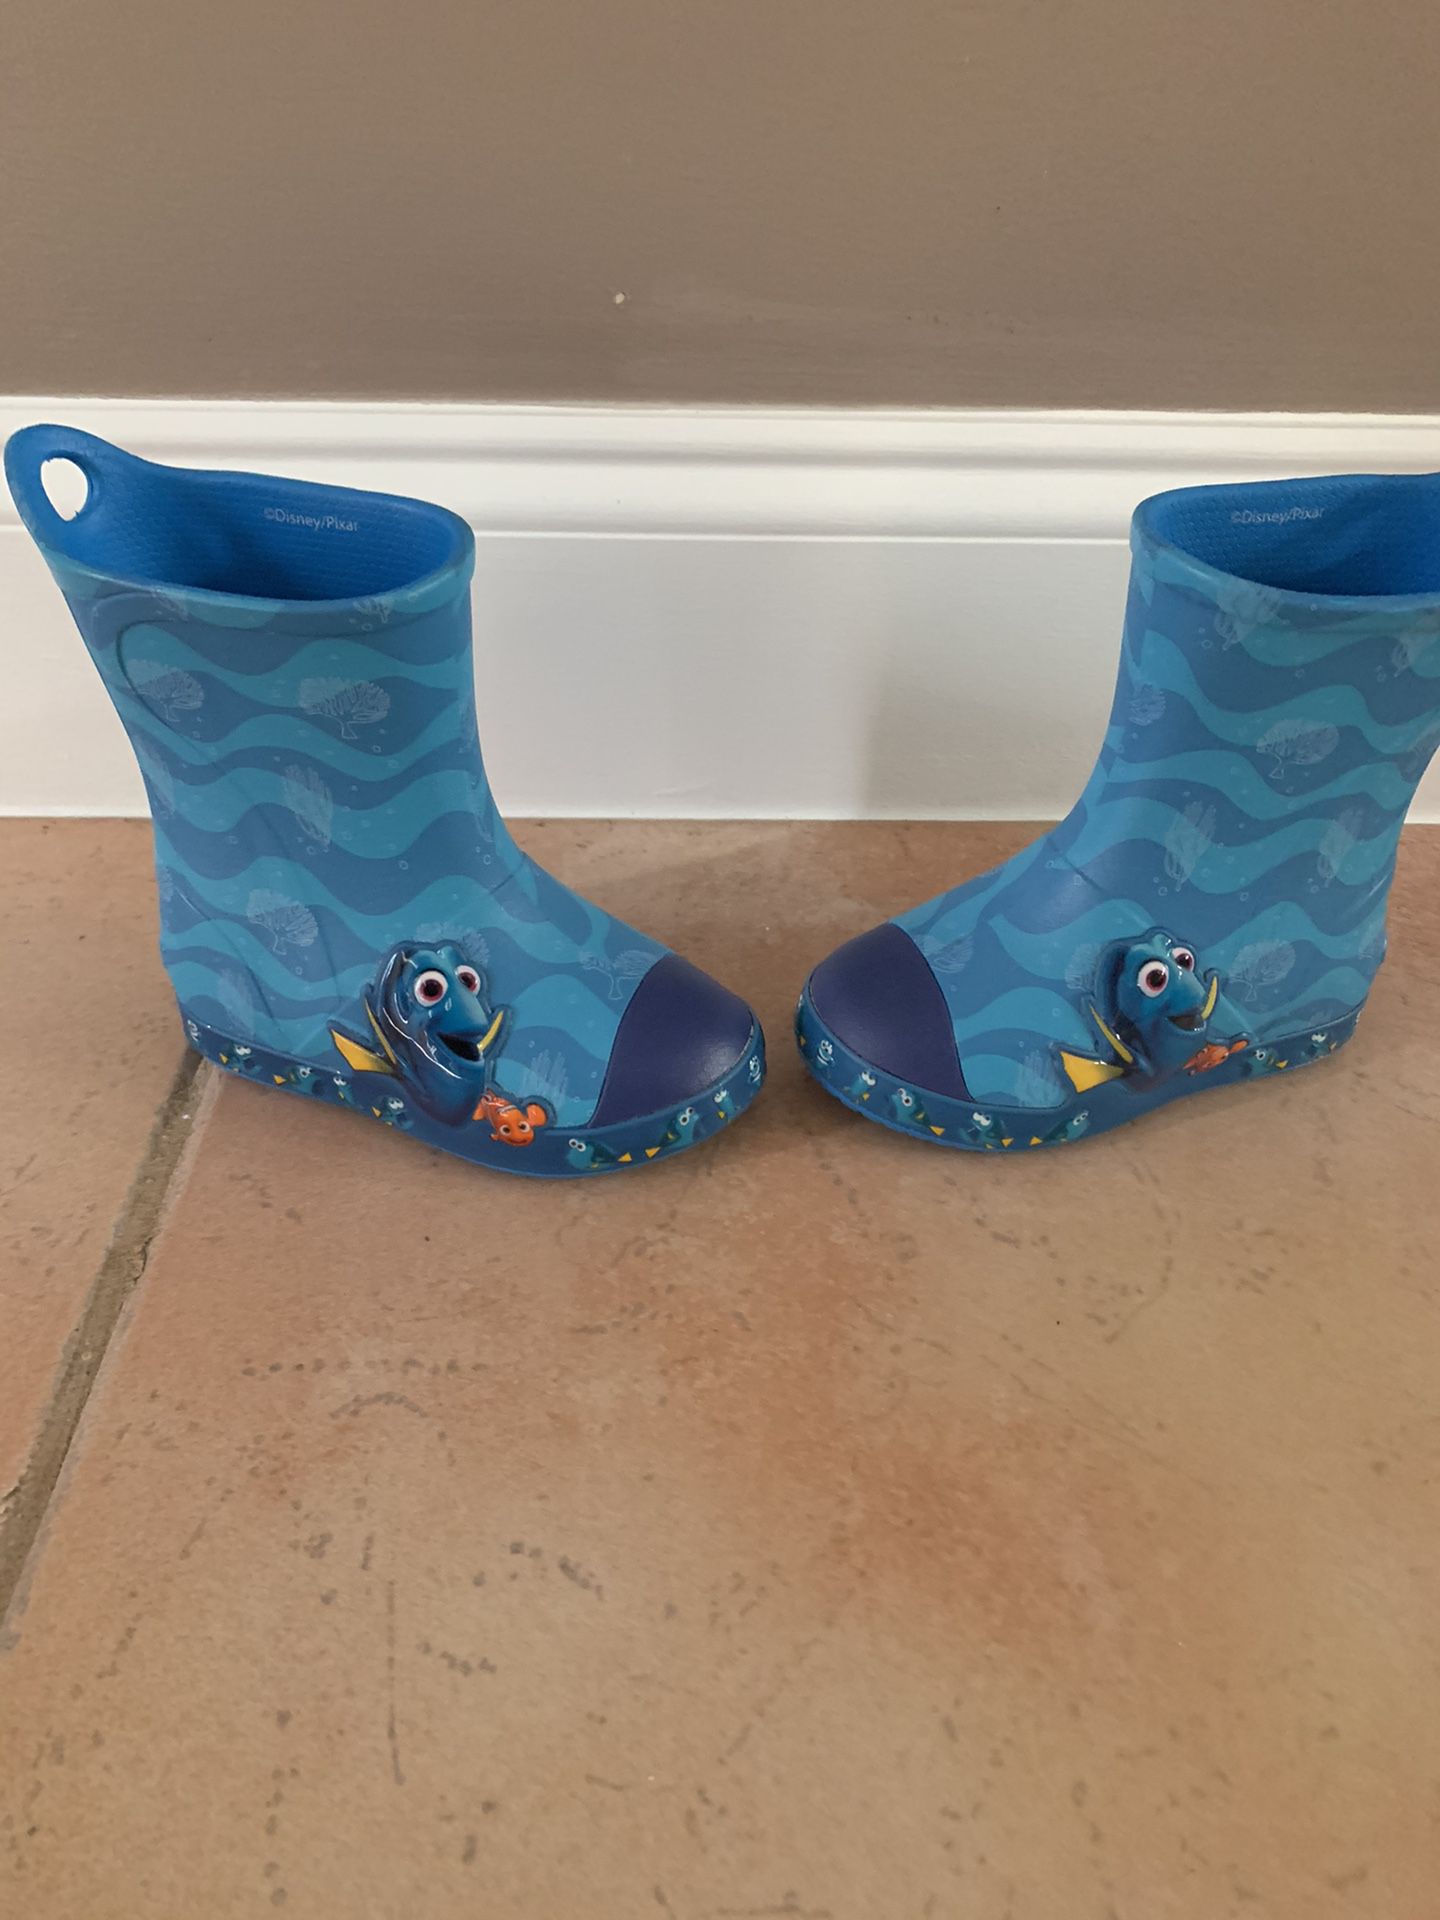 New Crocs kids rain boots - Finding Nemo